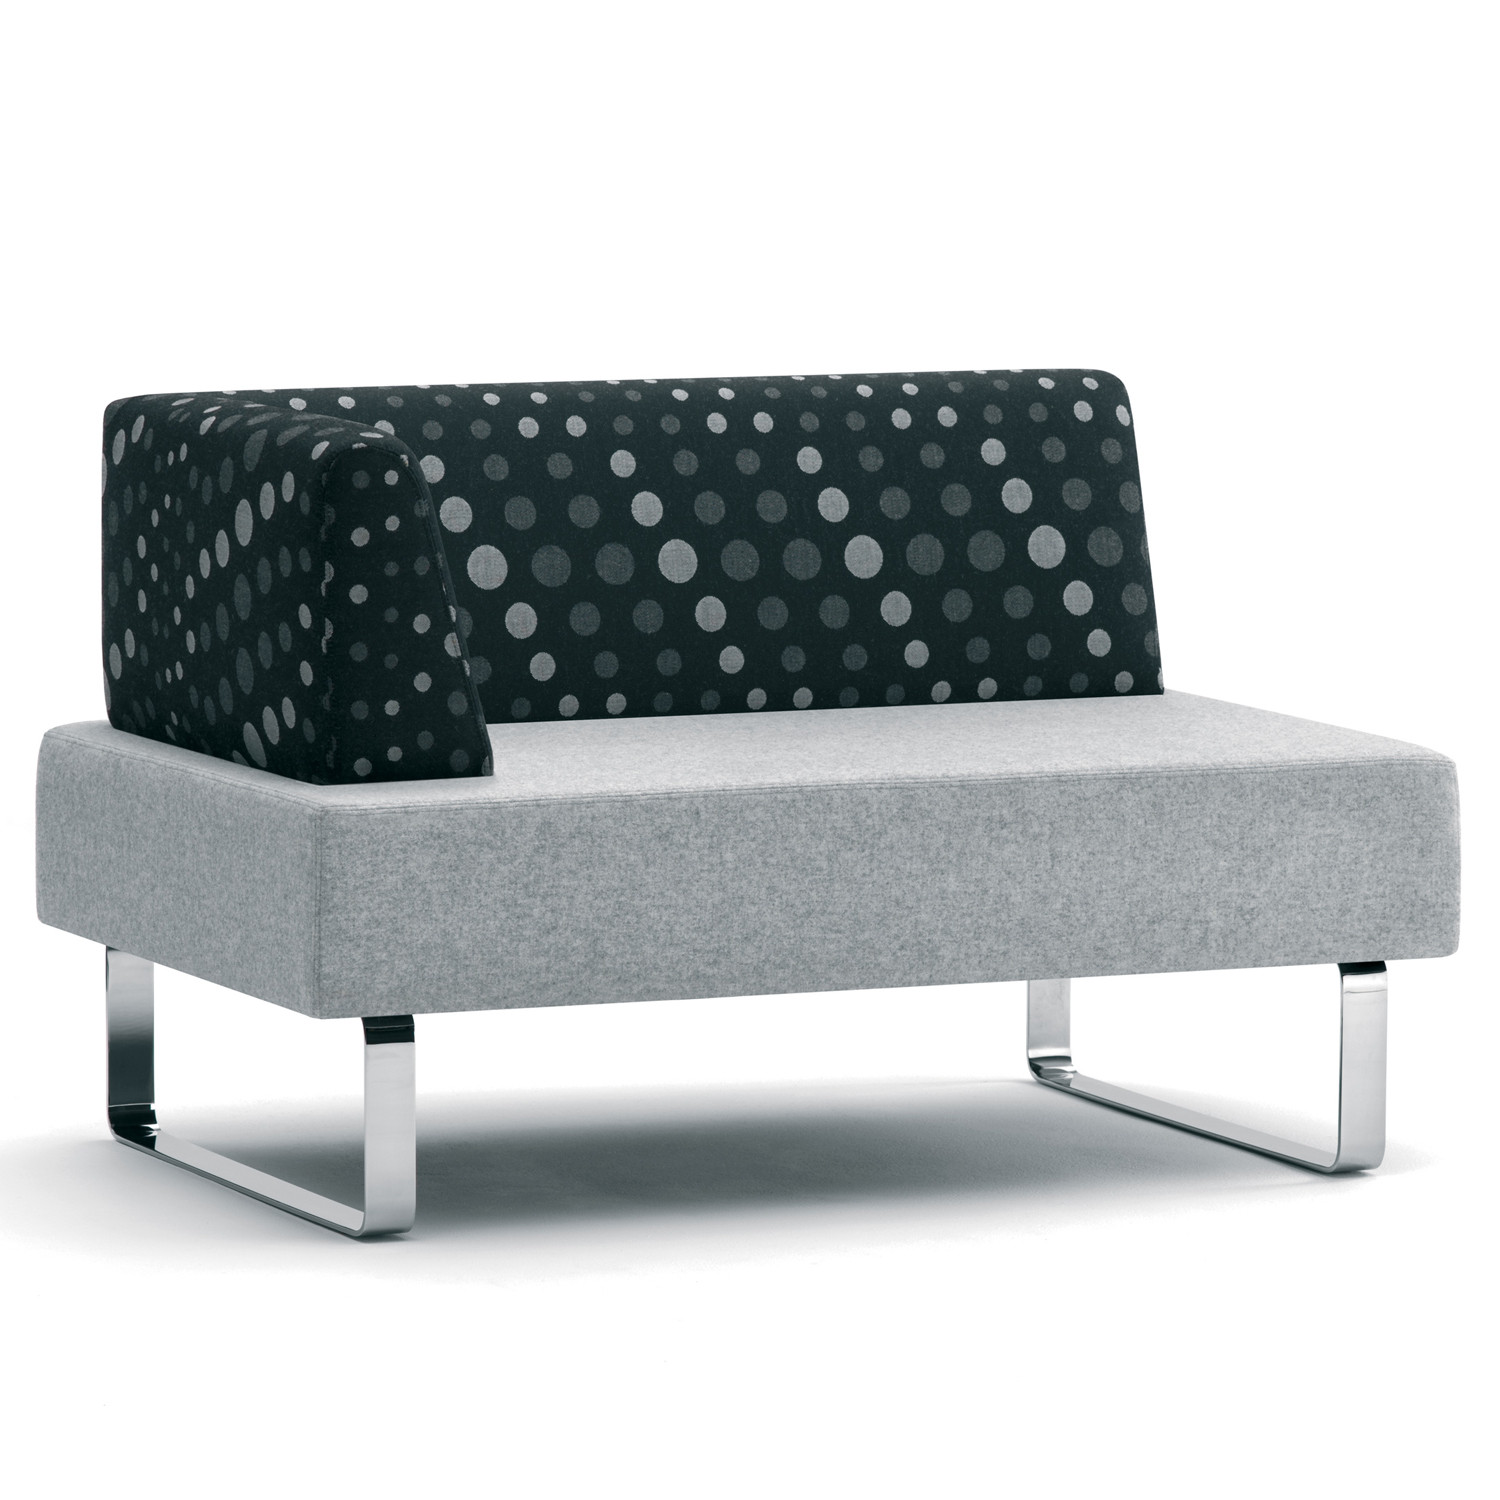 Intro Modular Bench by Edge Furniture